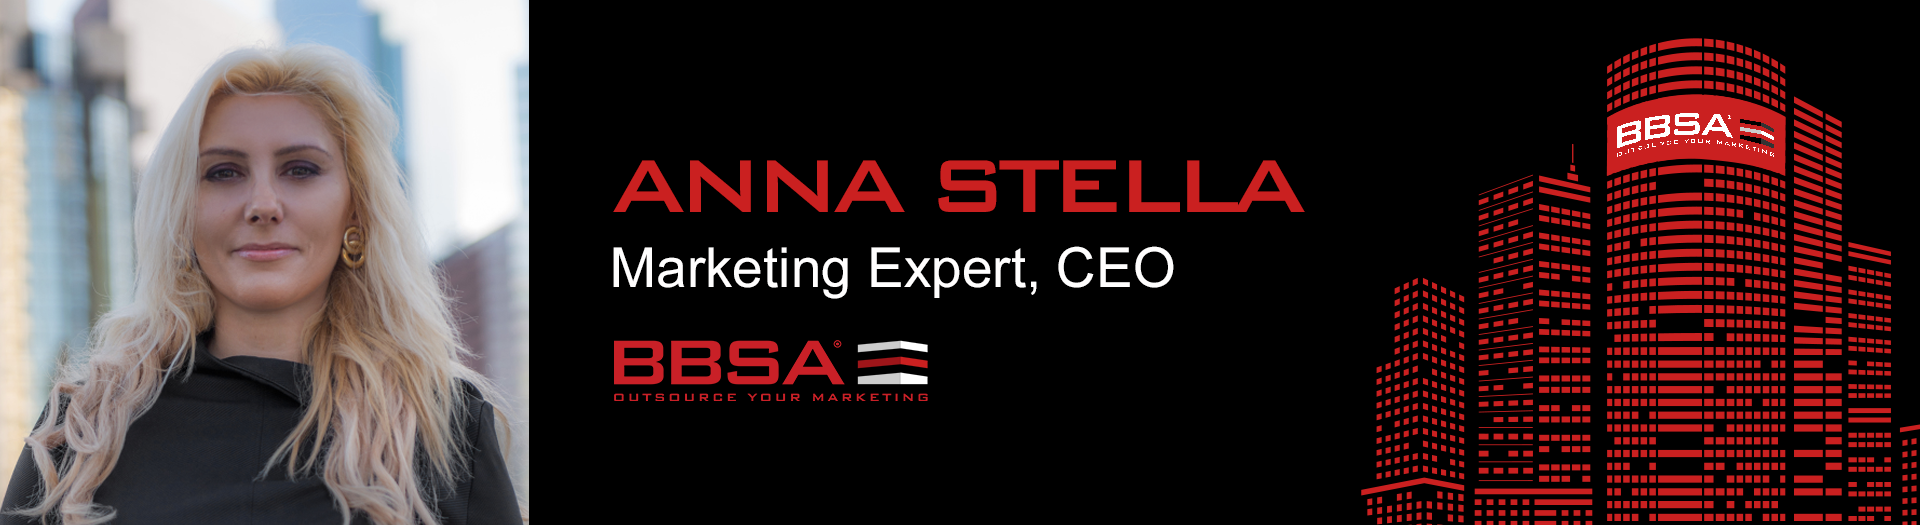 Anna Stella Marketing BBSA